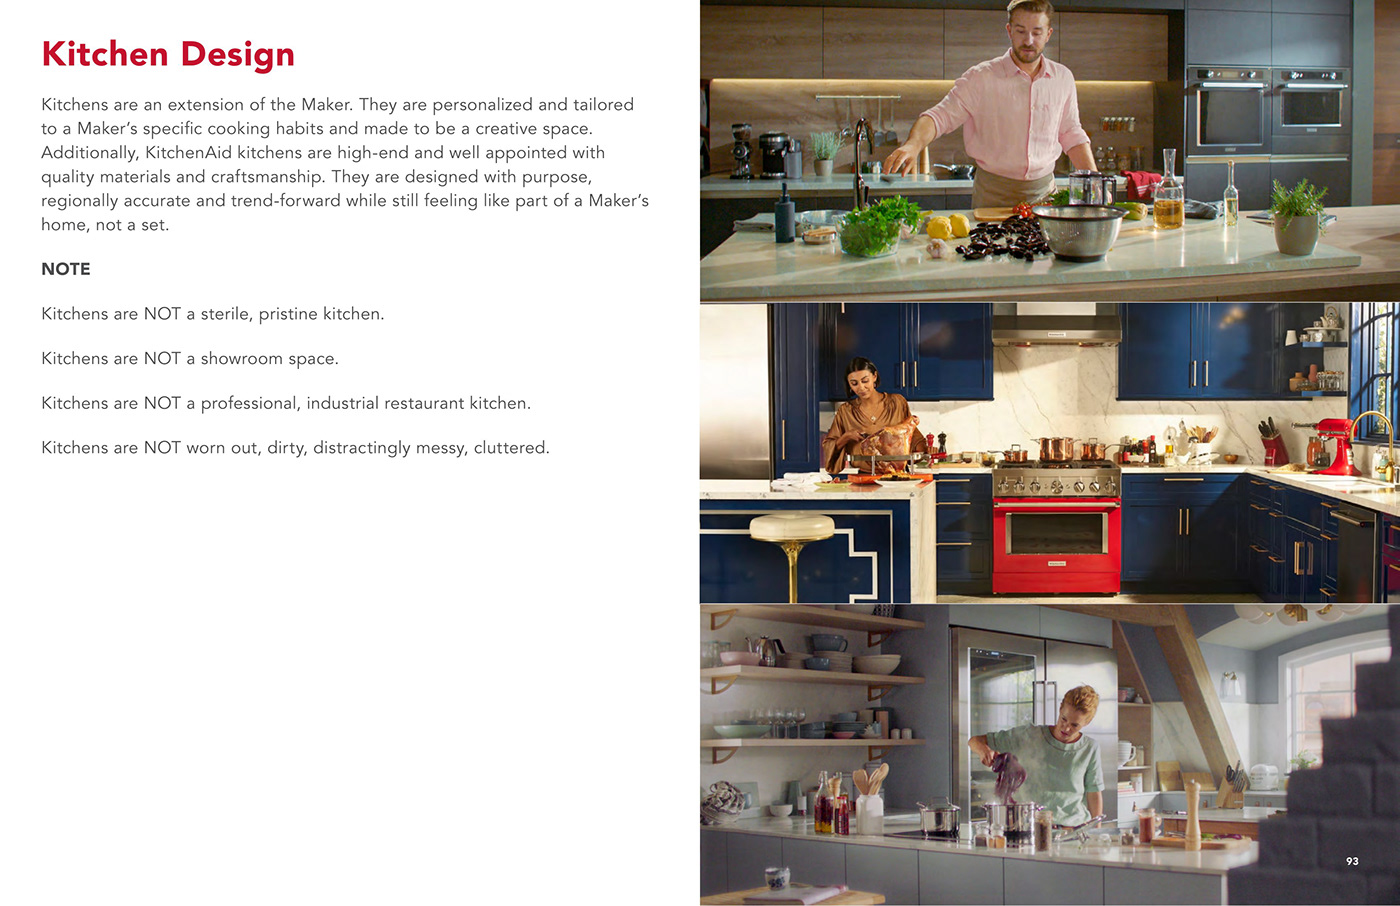 brand book identity Logo Design brand identity branding  visual identity brand guidelines design logo The Kitchen Aid